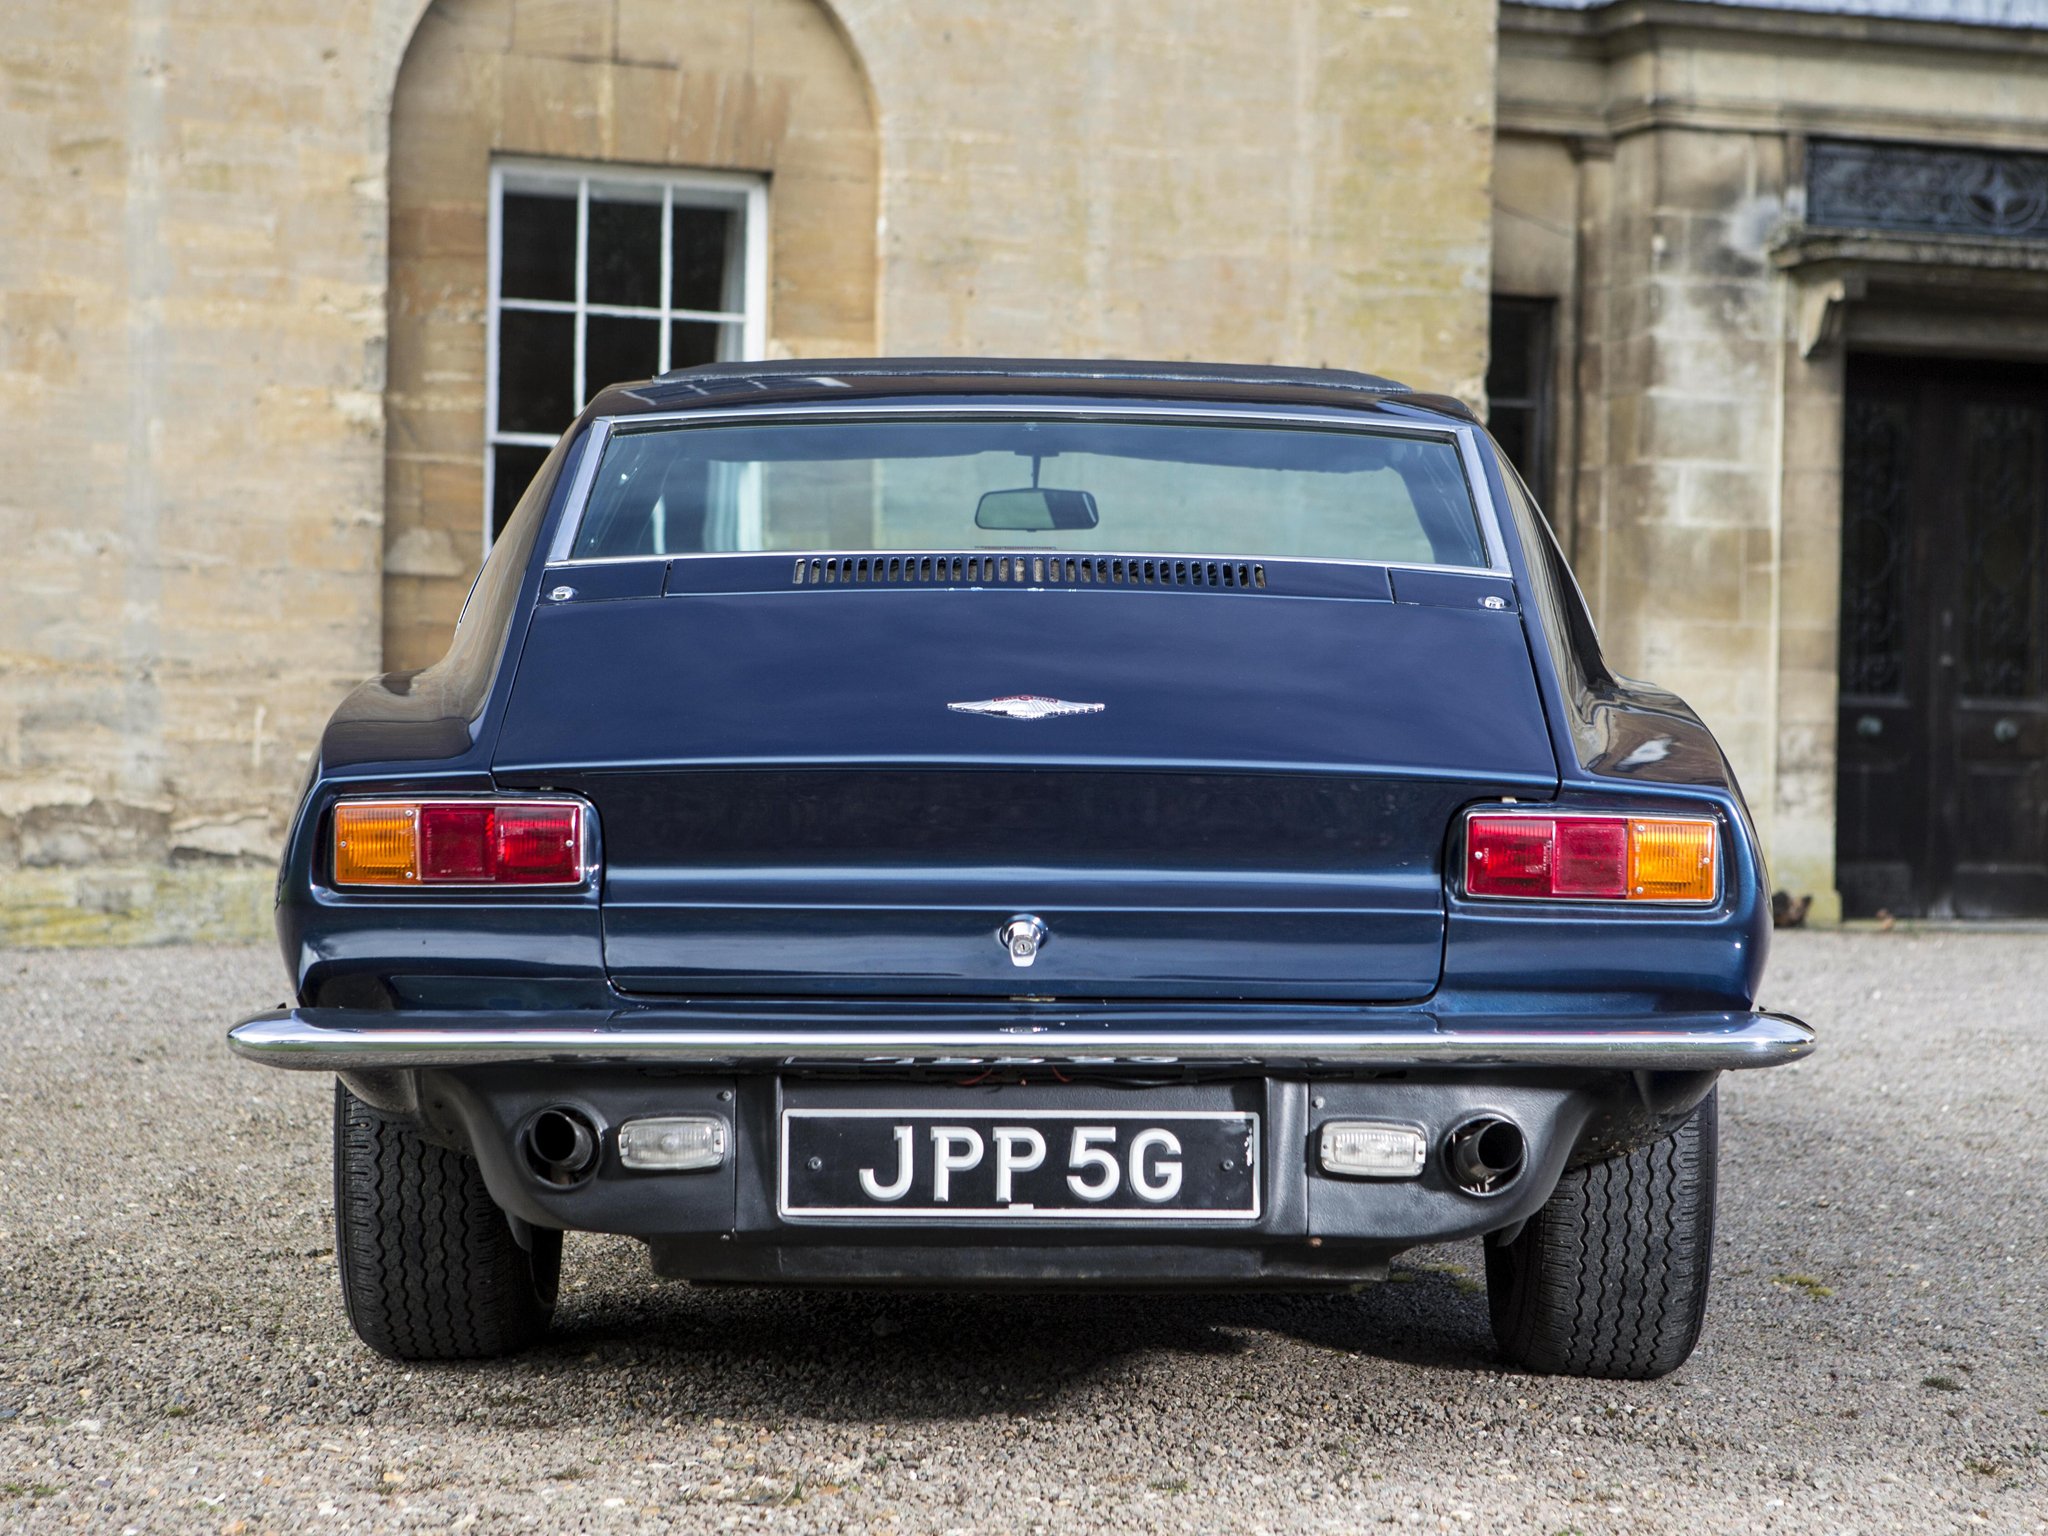 1969, Aston, Martin, Lagonda, V 8, Saloon, Prototype,  mp2301 , Classic, Ew Wallpaper